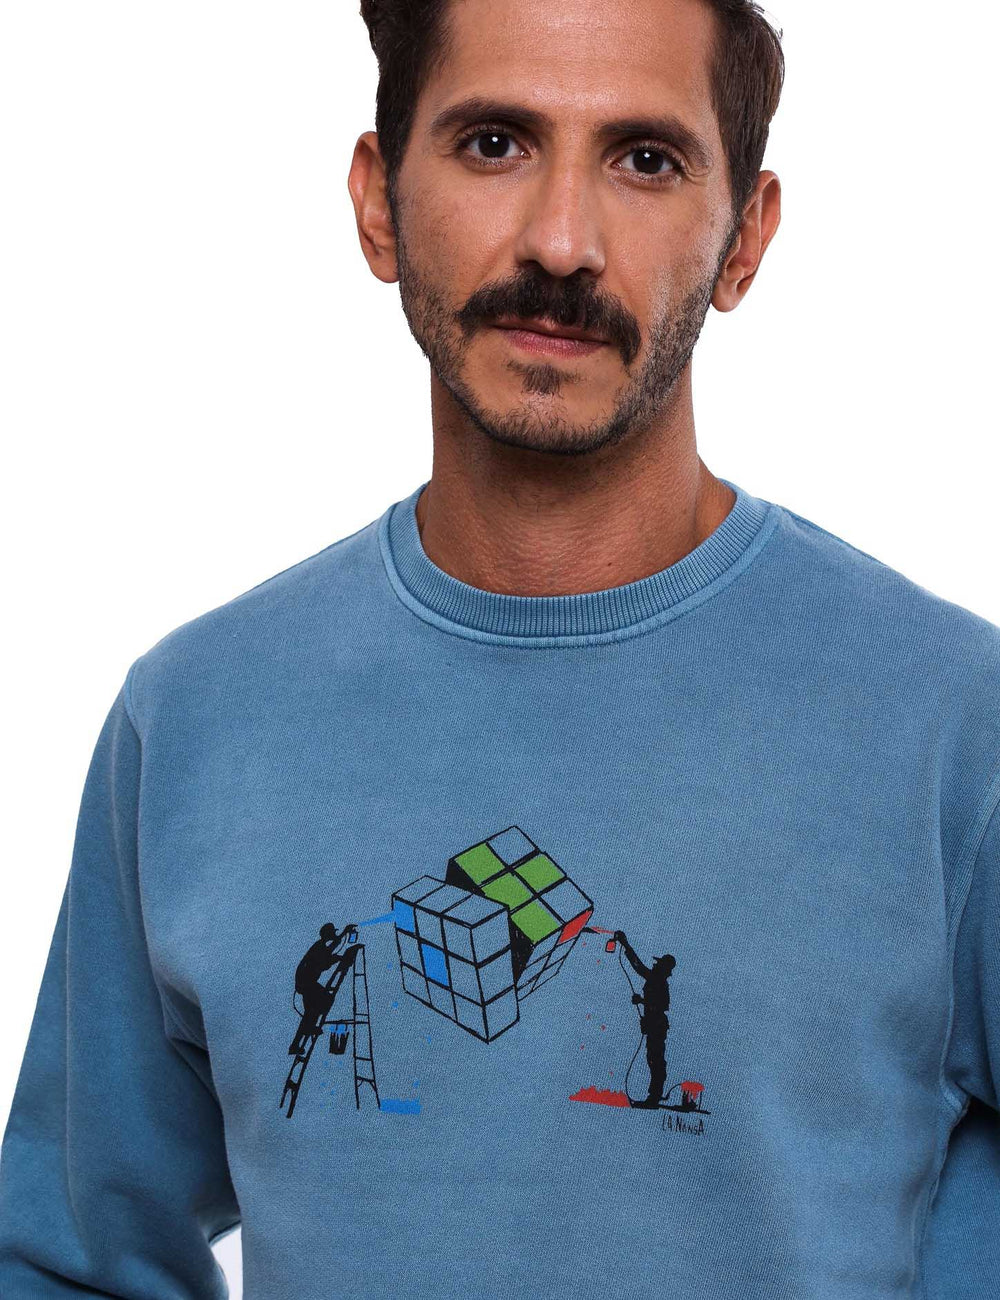 Cubo Rubic Sweatshirt